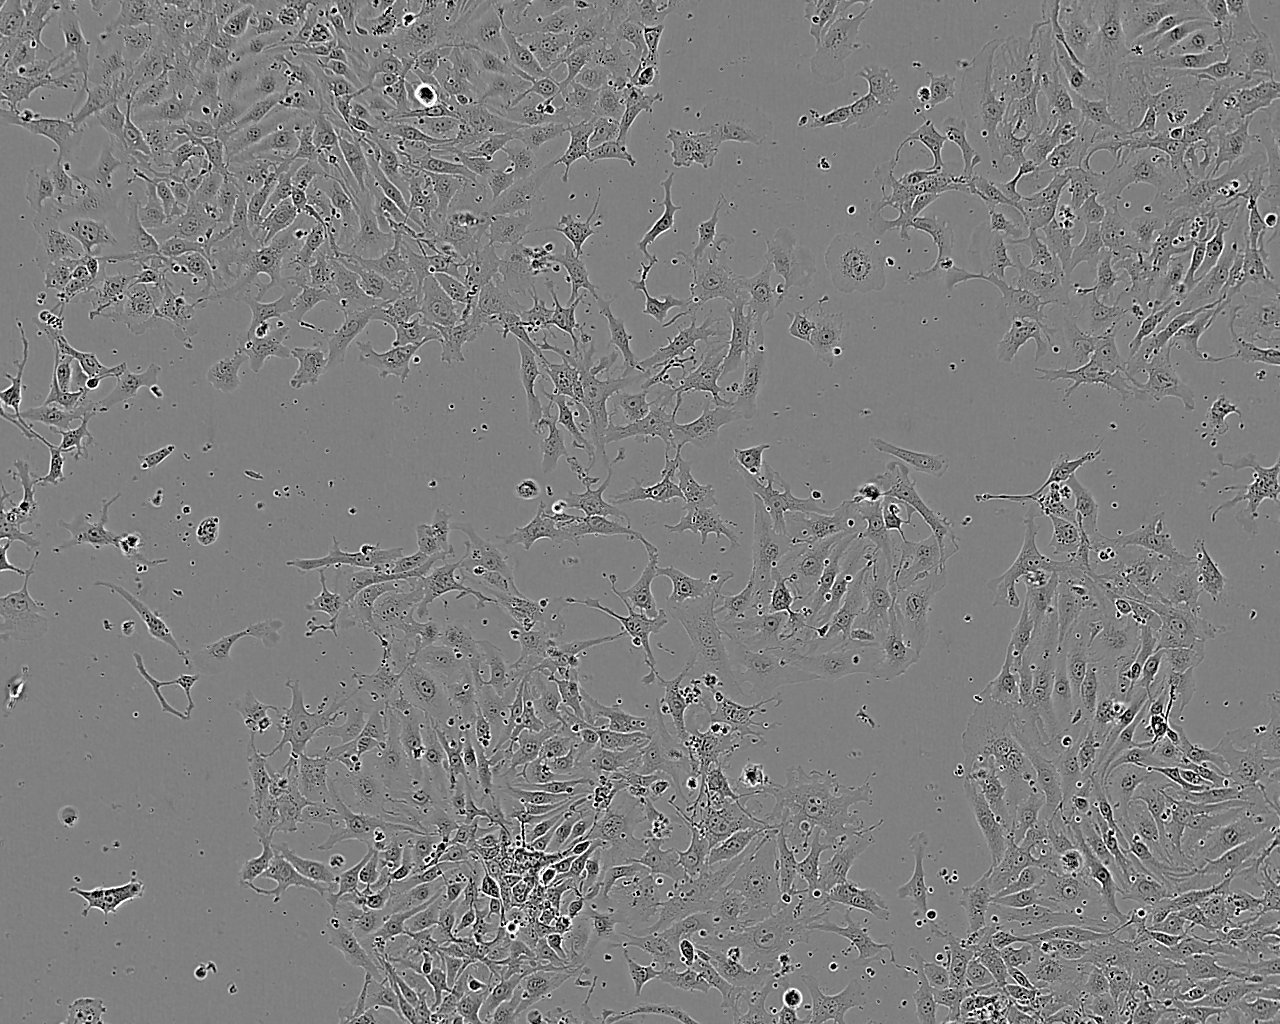 HEK293T/17 epithelioid cells人胚肾细胞系